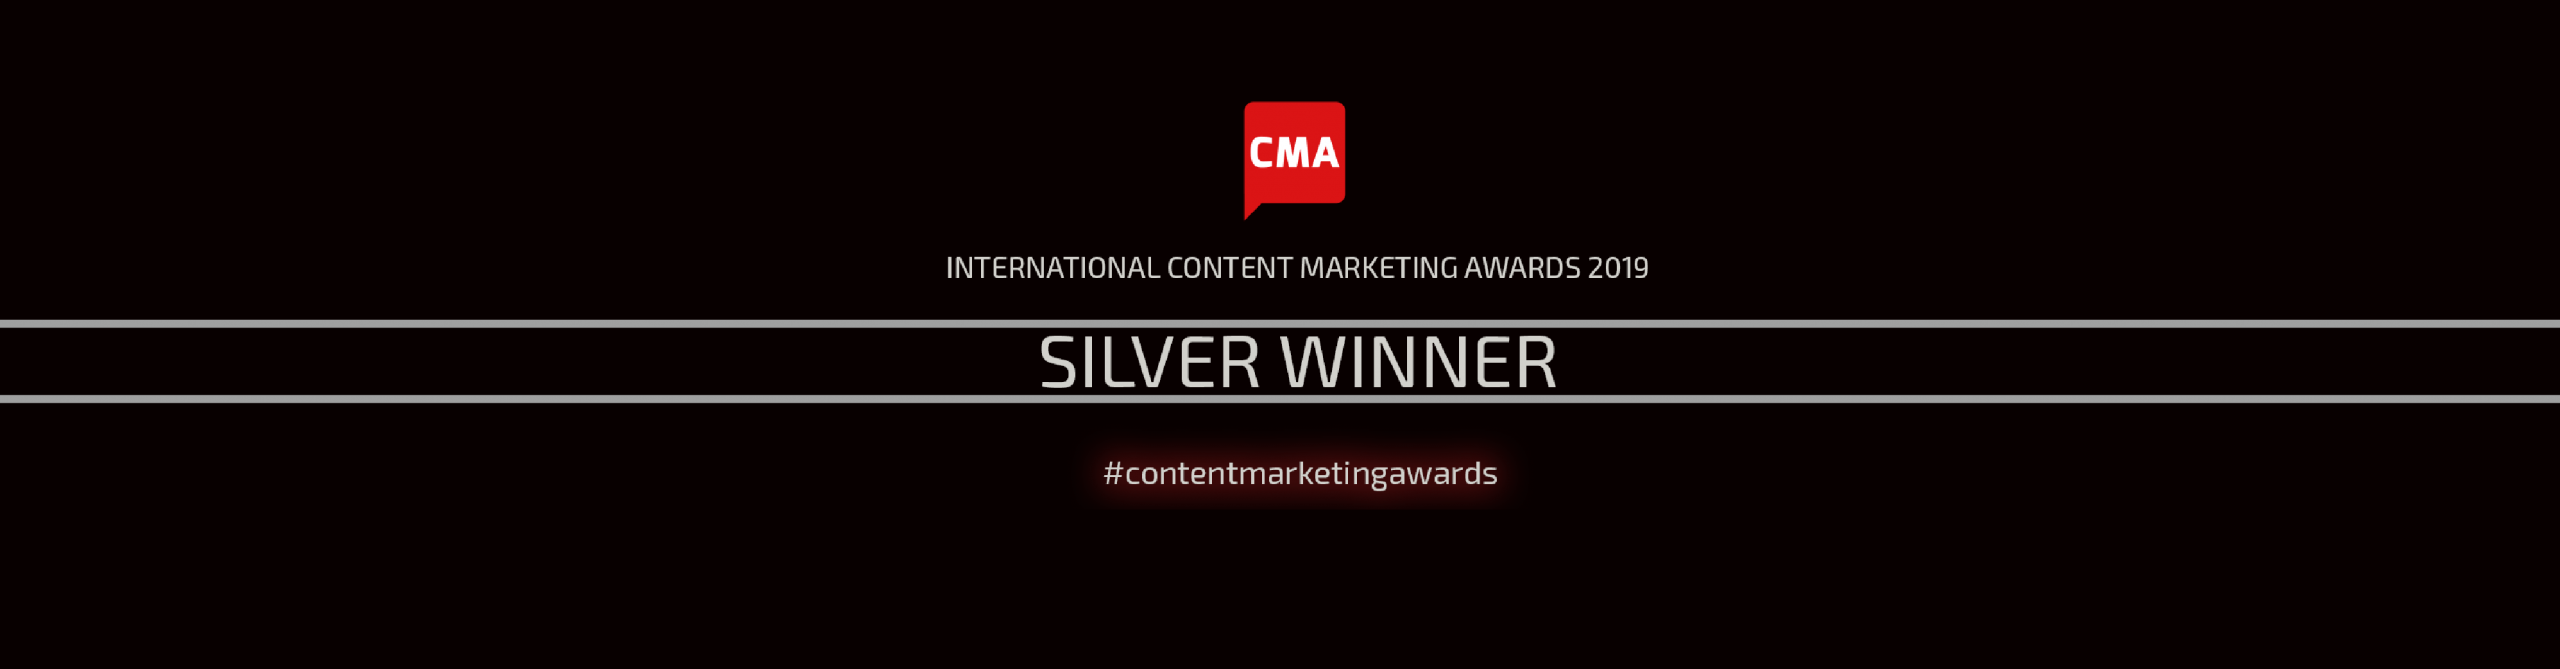 international content marketing association winner